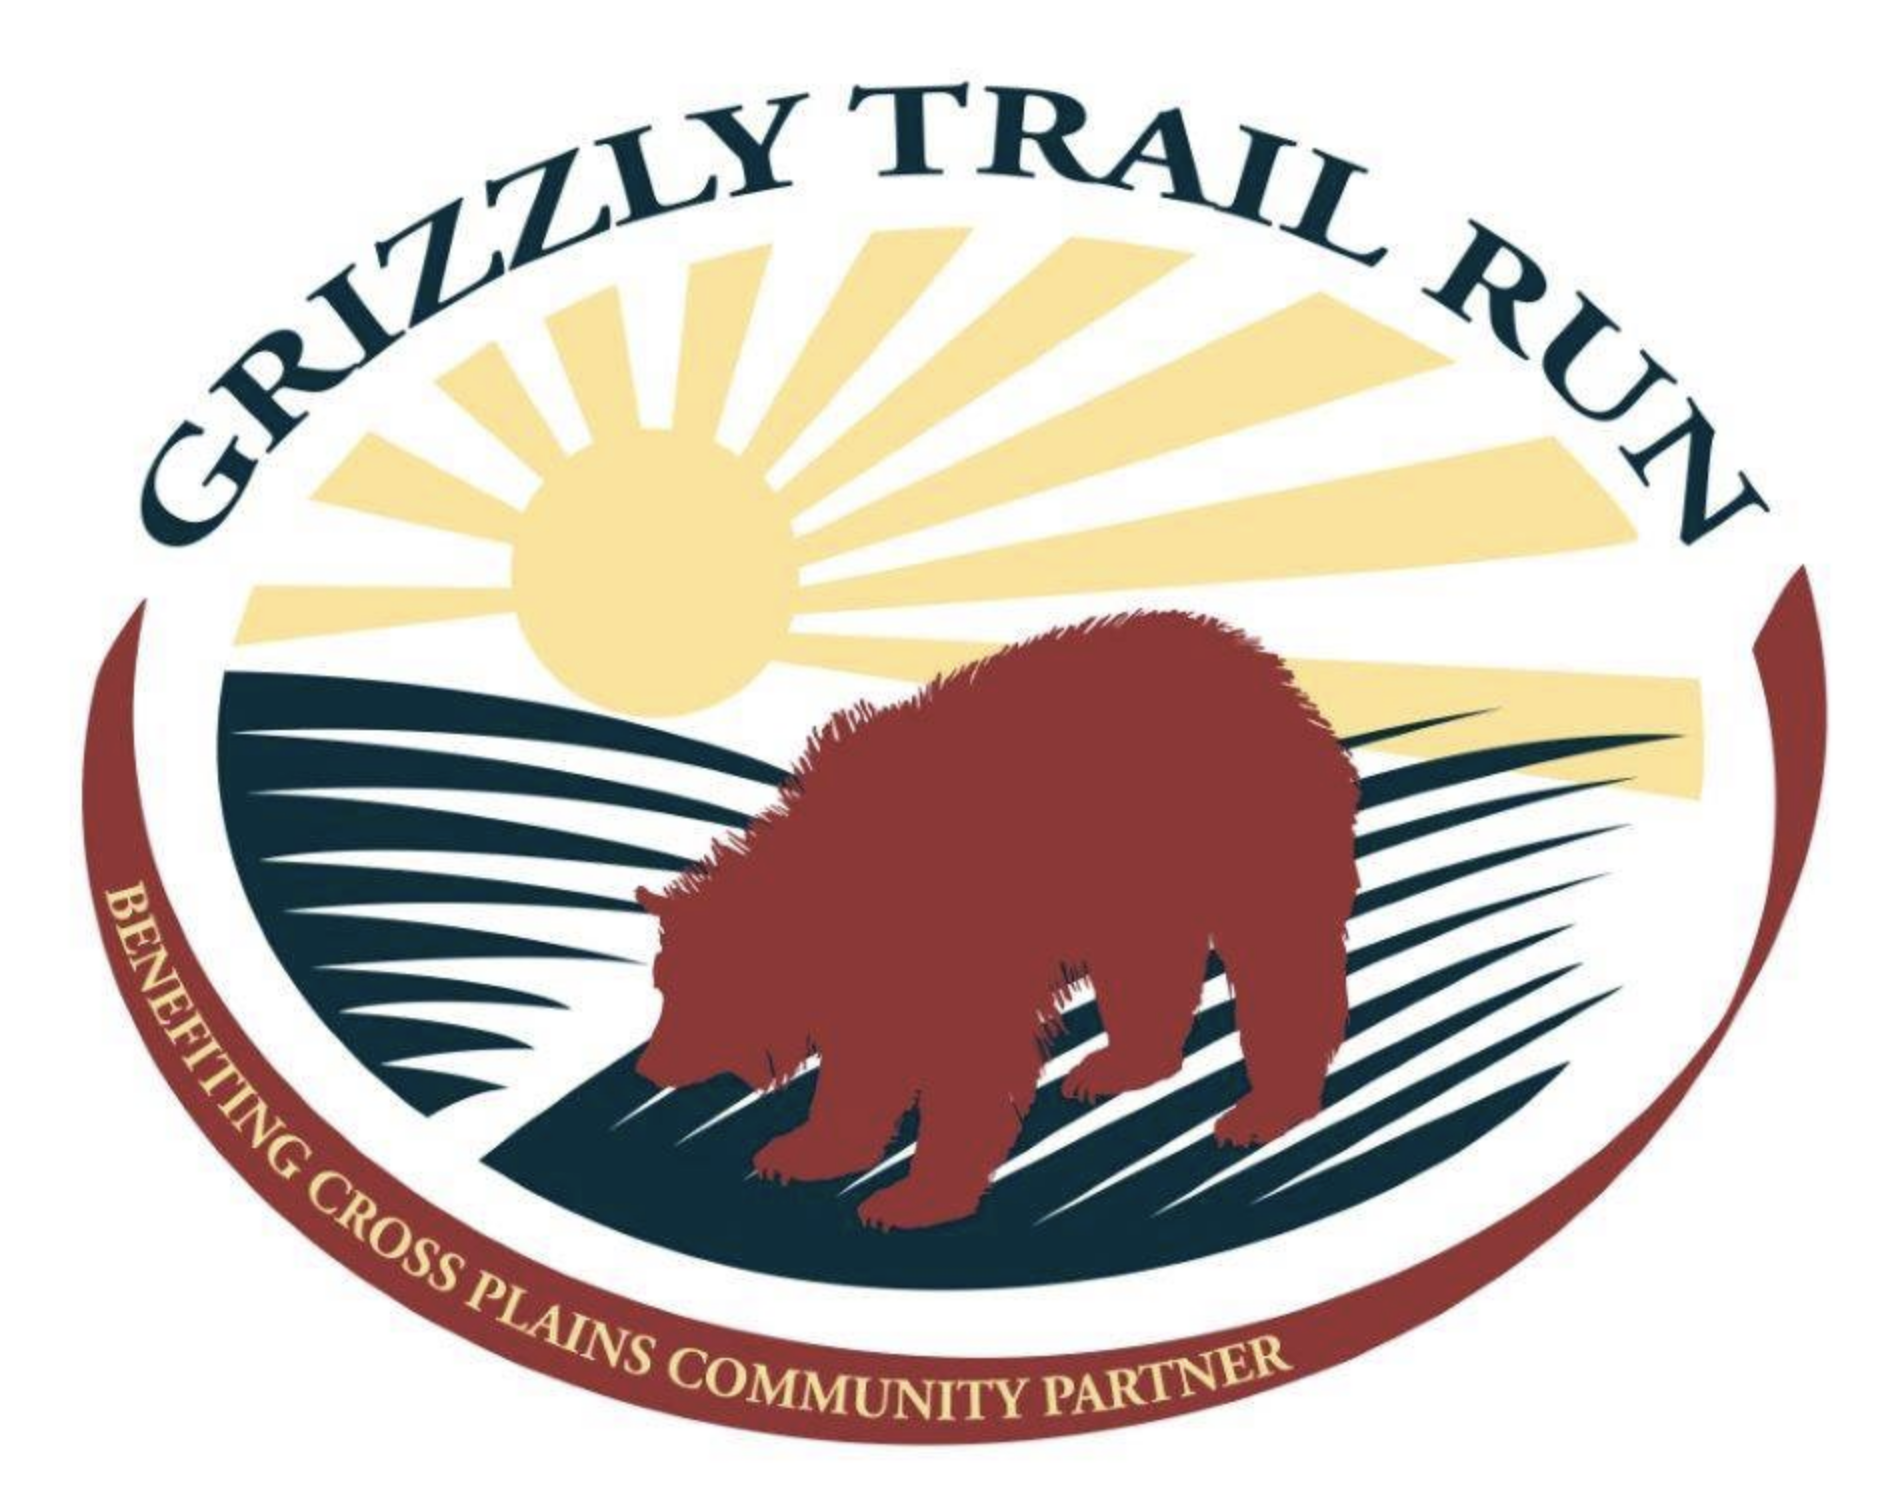 Grizzly Trail Run